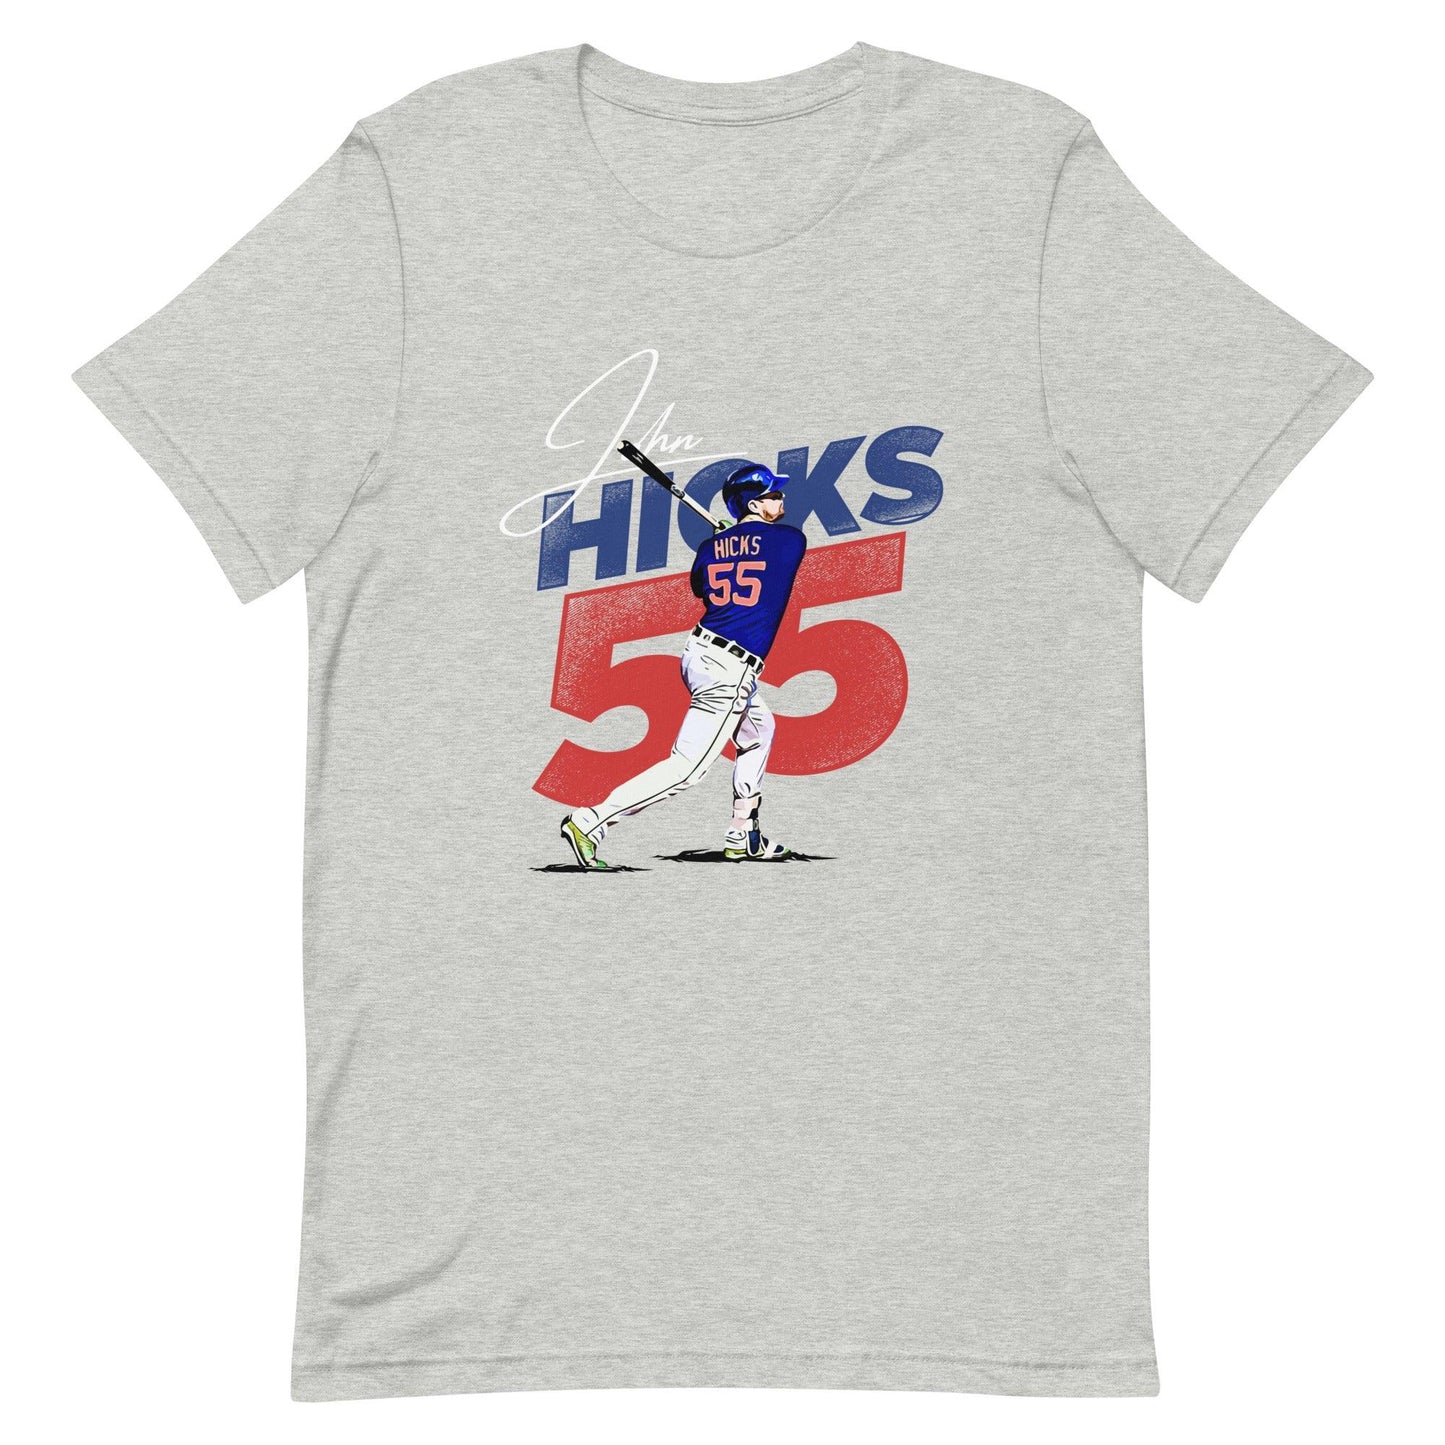 John Hicks "Gameday" t-shirt - Fan Arch